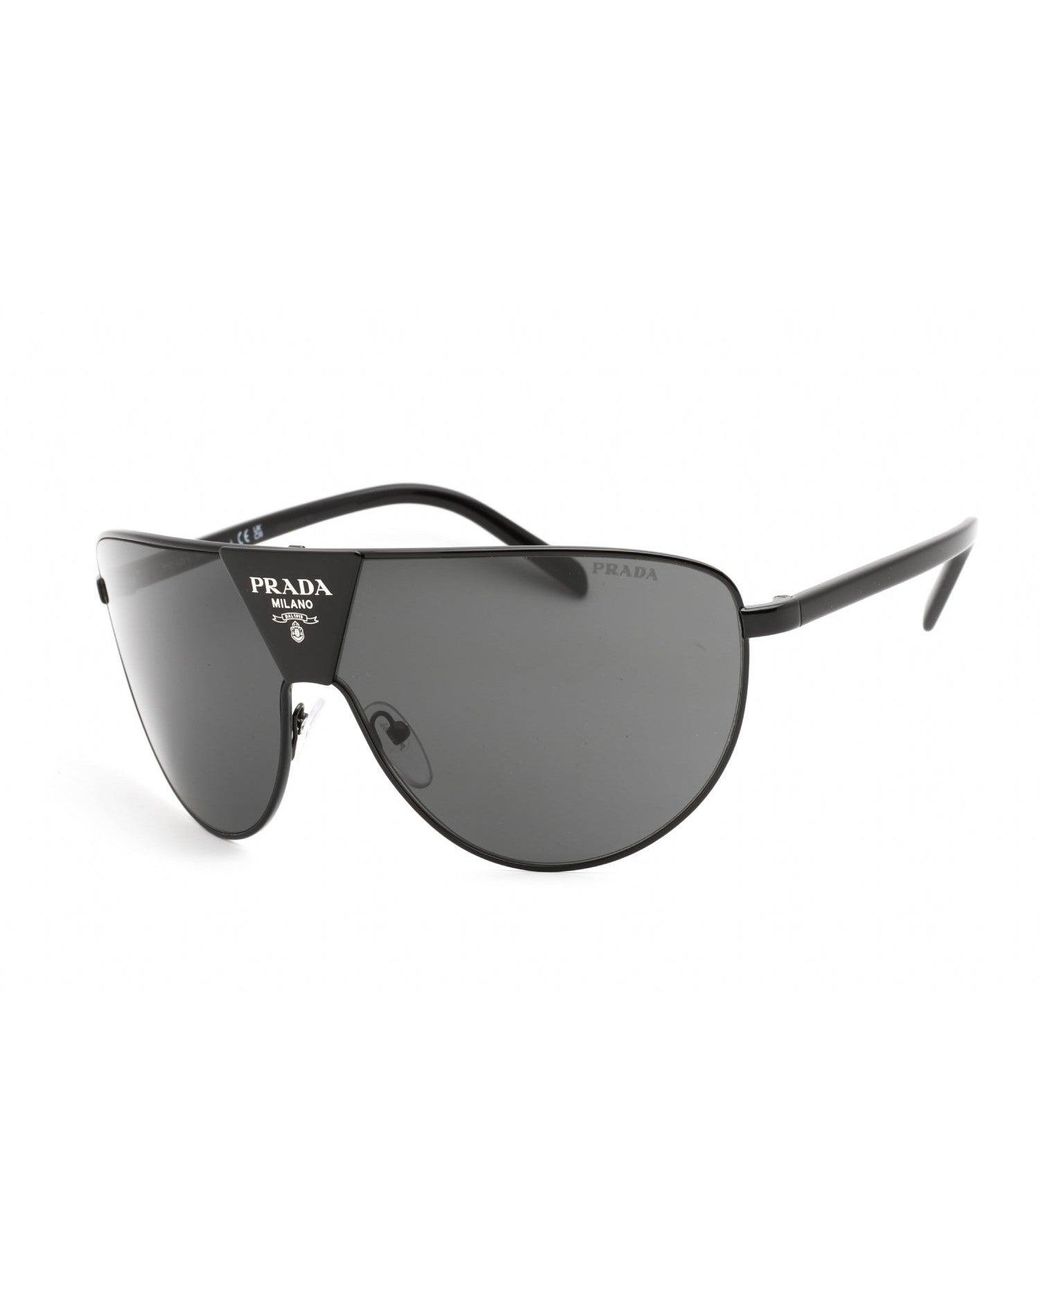 Prada PR 14ZS 50 Polar Dark Grey & Baltic Marble Polarized Sunglasses